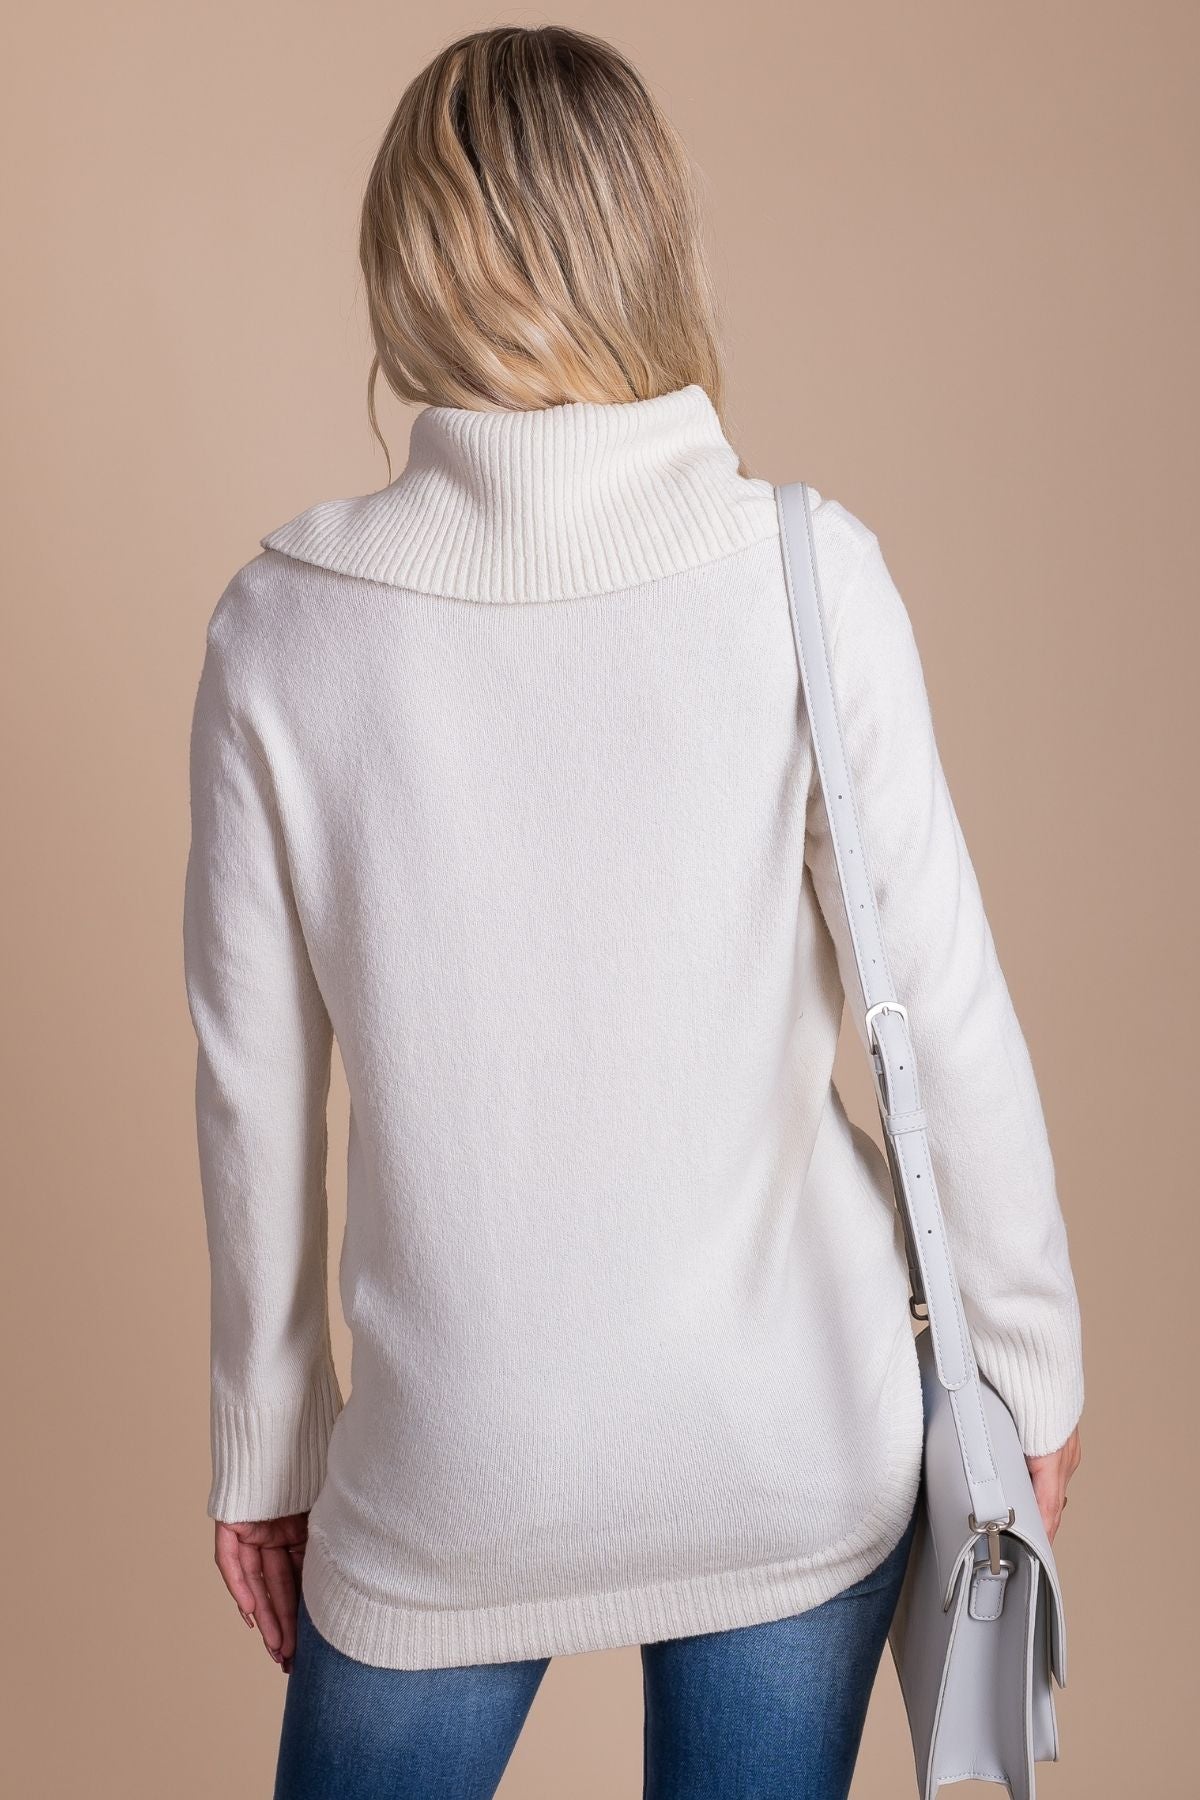 Women's White Knit Boutique Sweater